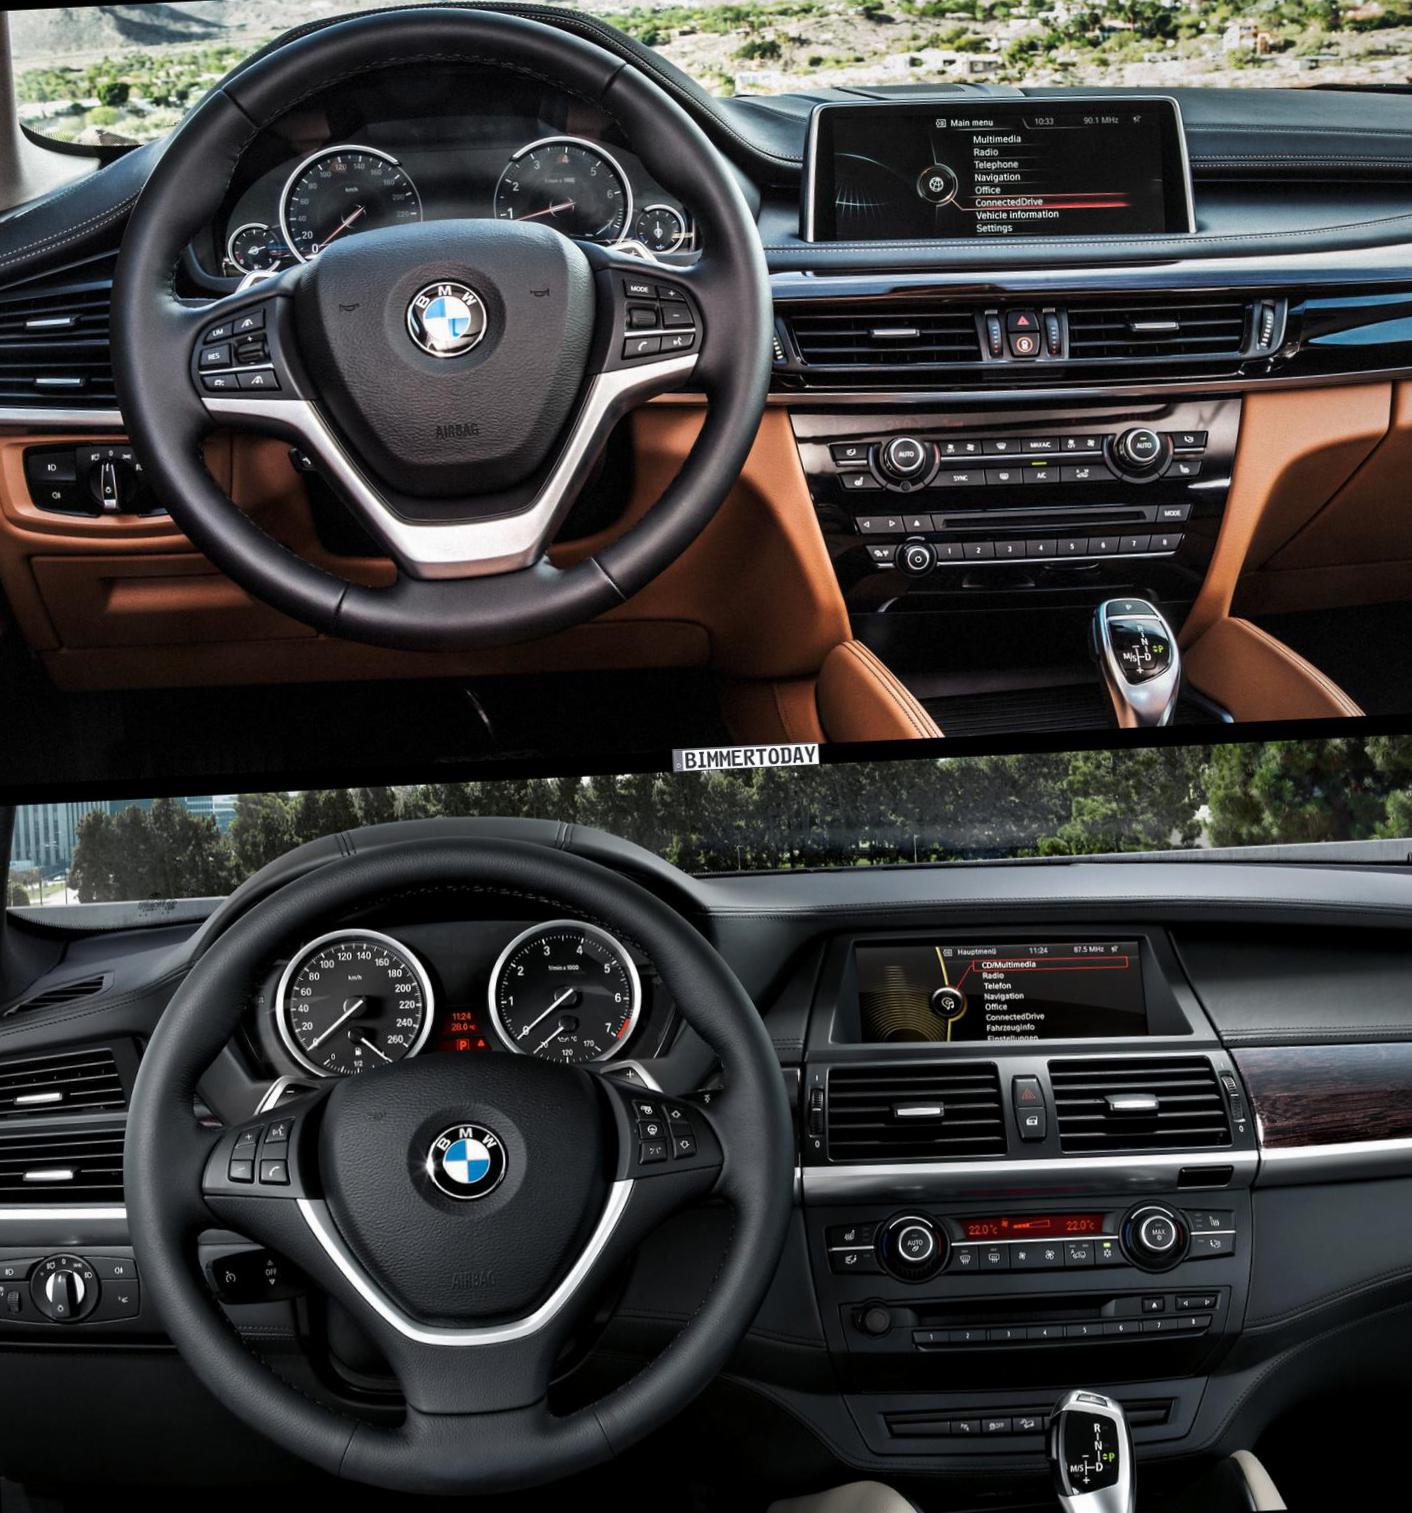 X6 (F16) BMW configuration 2014